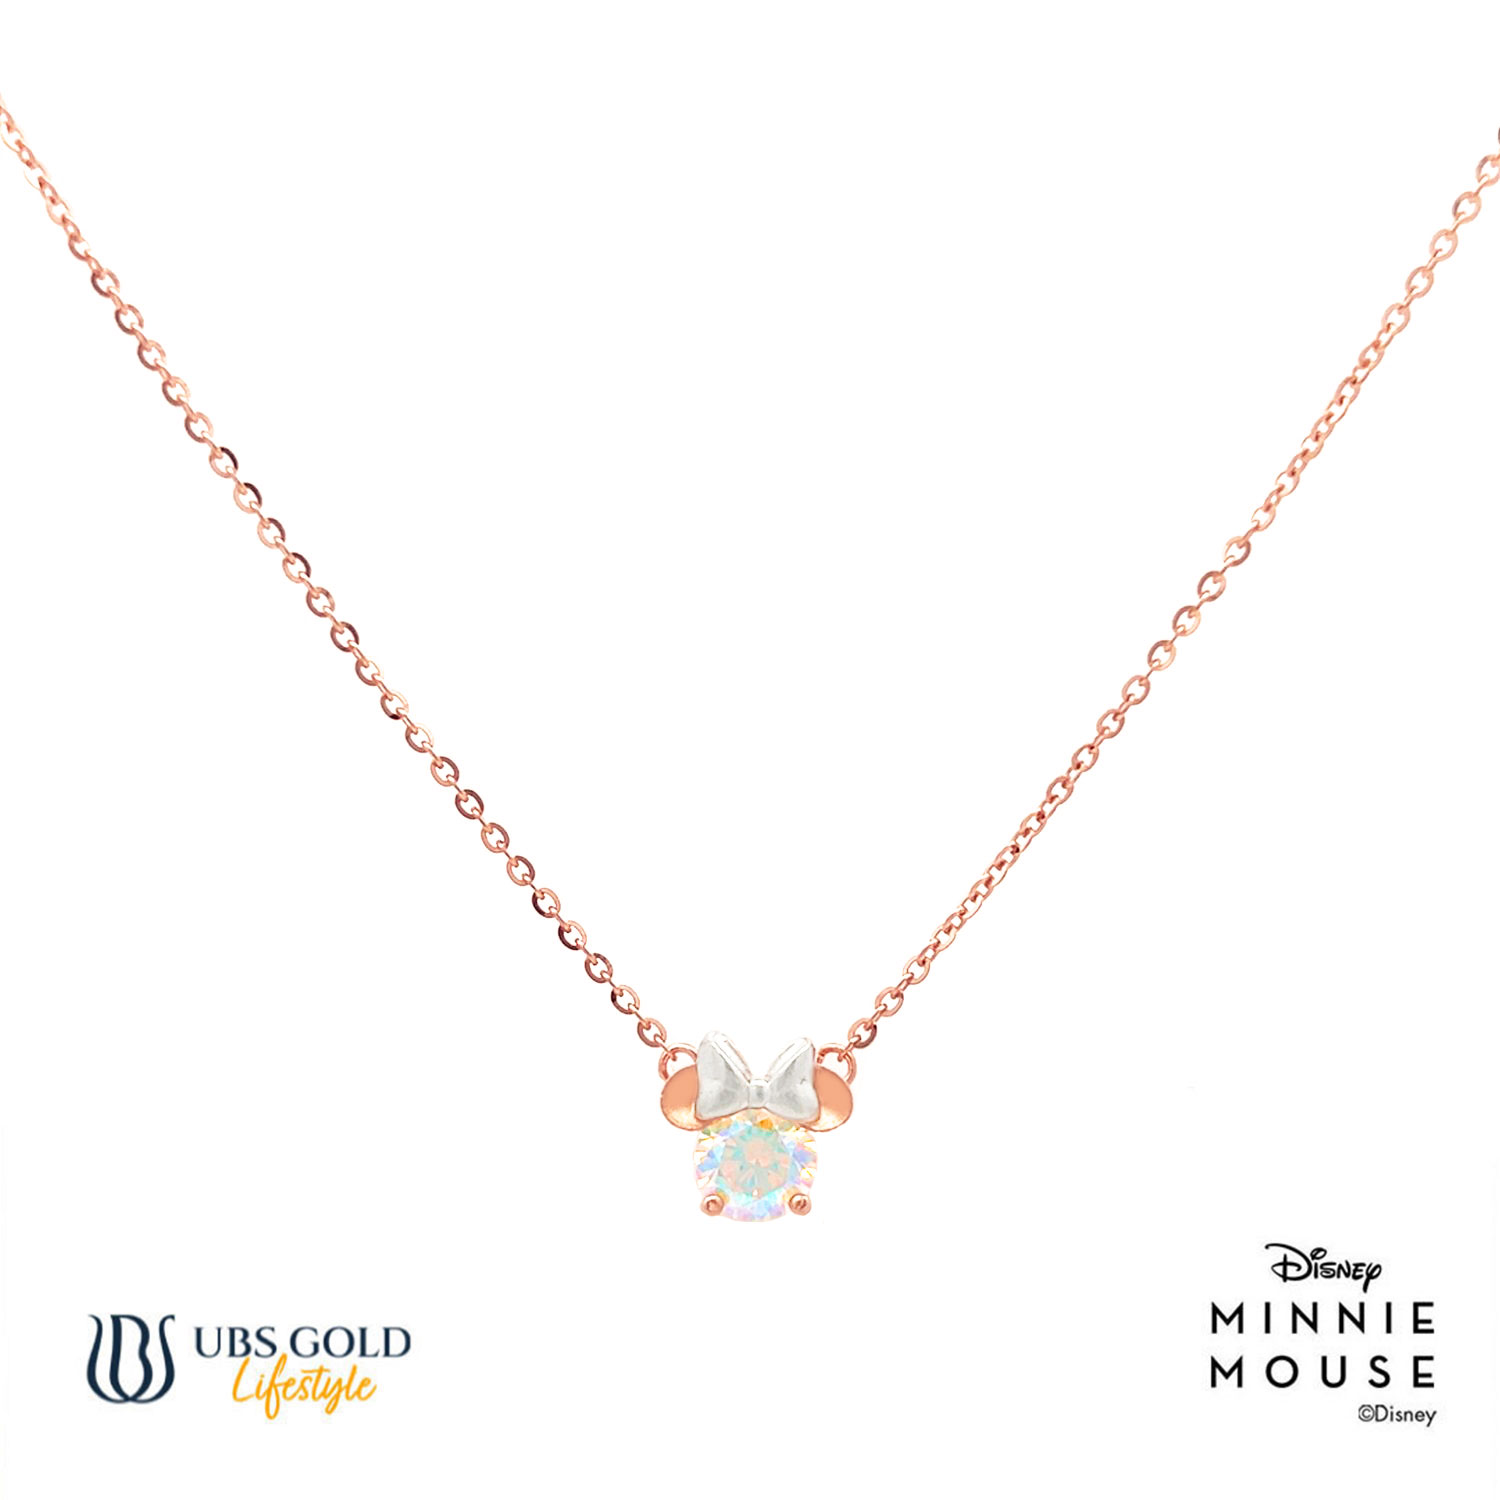 UBS Gold Kalung Emas Disney Aurora Minnie Mouse - Kky0223 - 17K